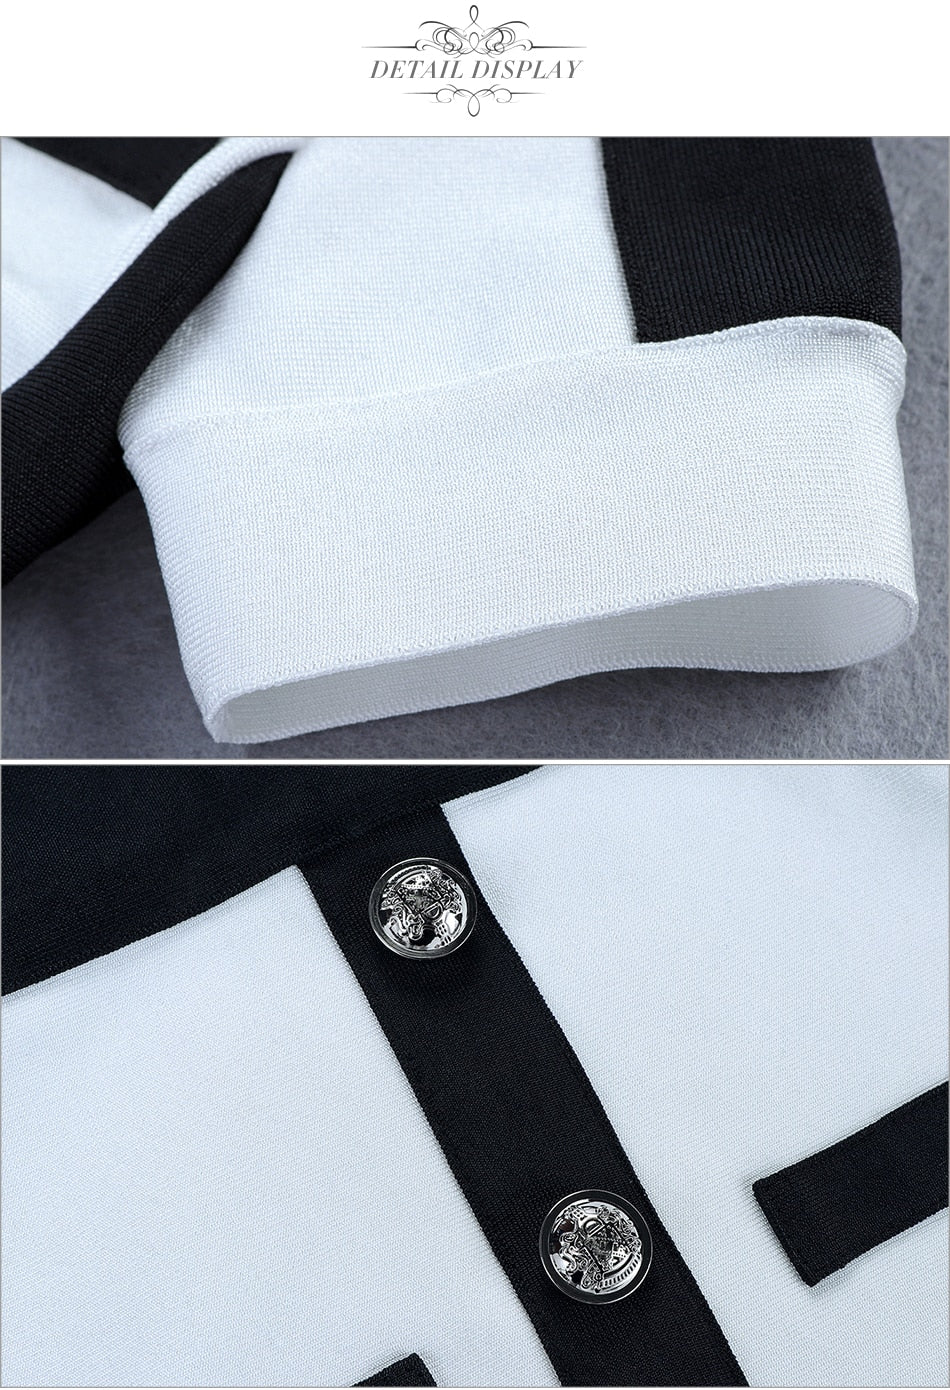 Black and White Button Embellished Bodycon Midi Dress